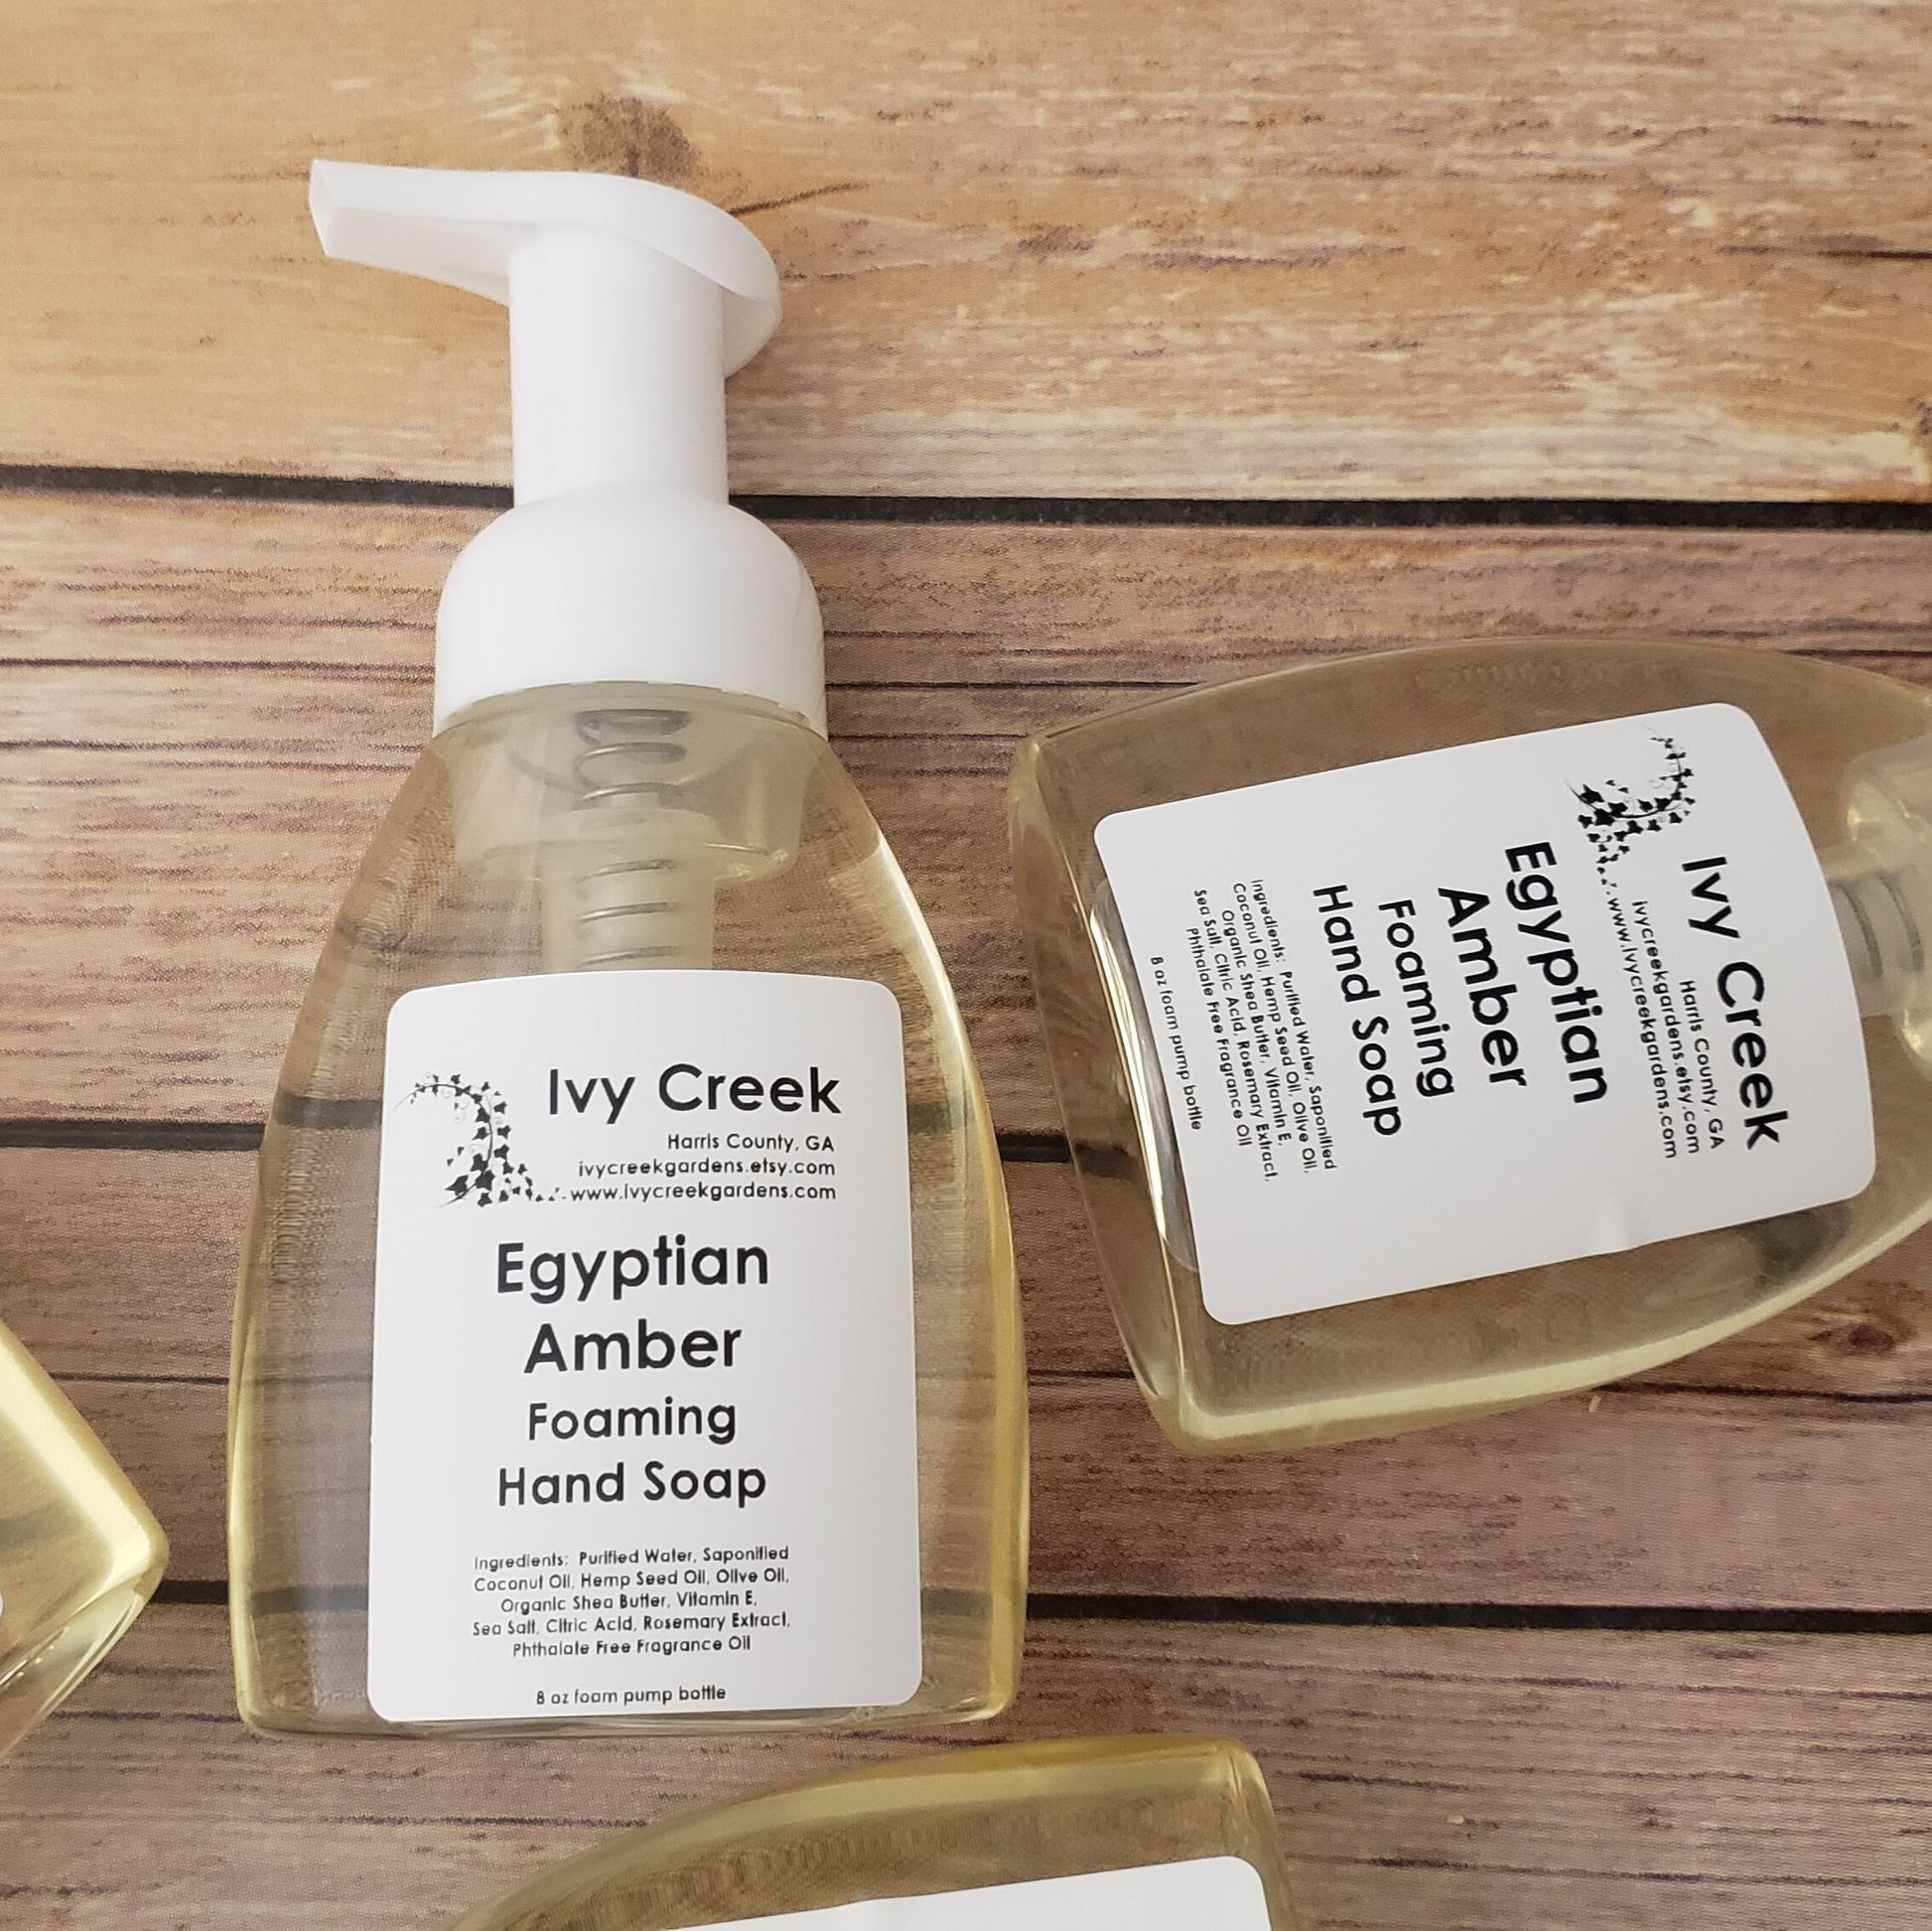 Ivy Creek Egyptian Amber Foaming Hand Soap - Natural Moisturizing Hand Soap - 8 oz